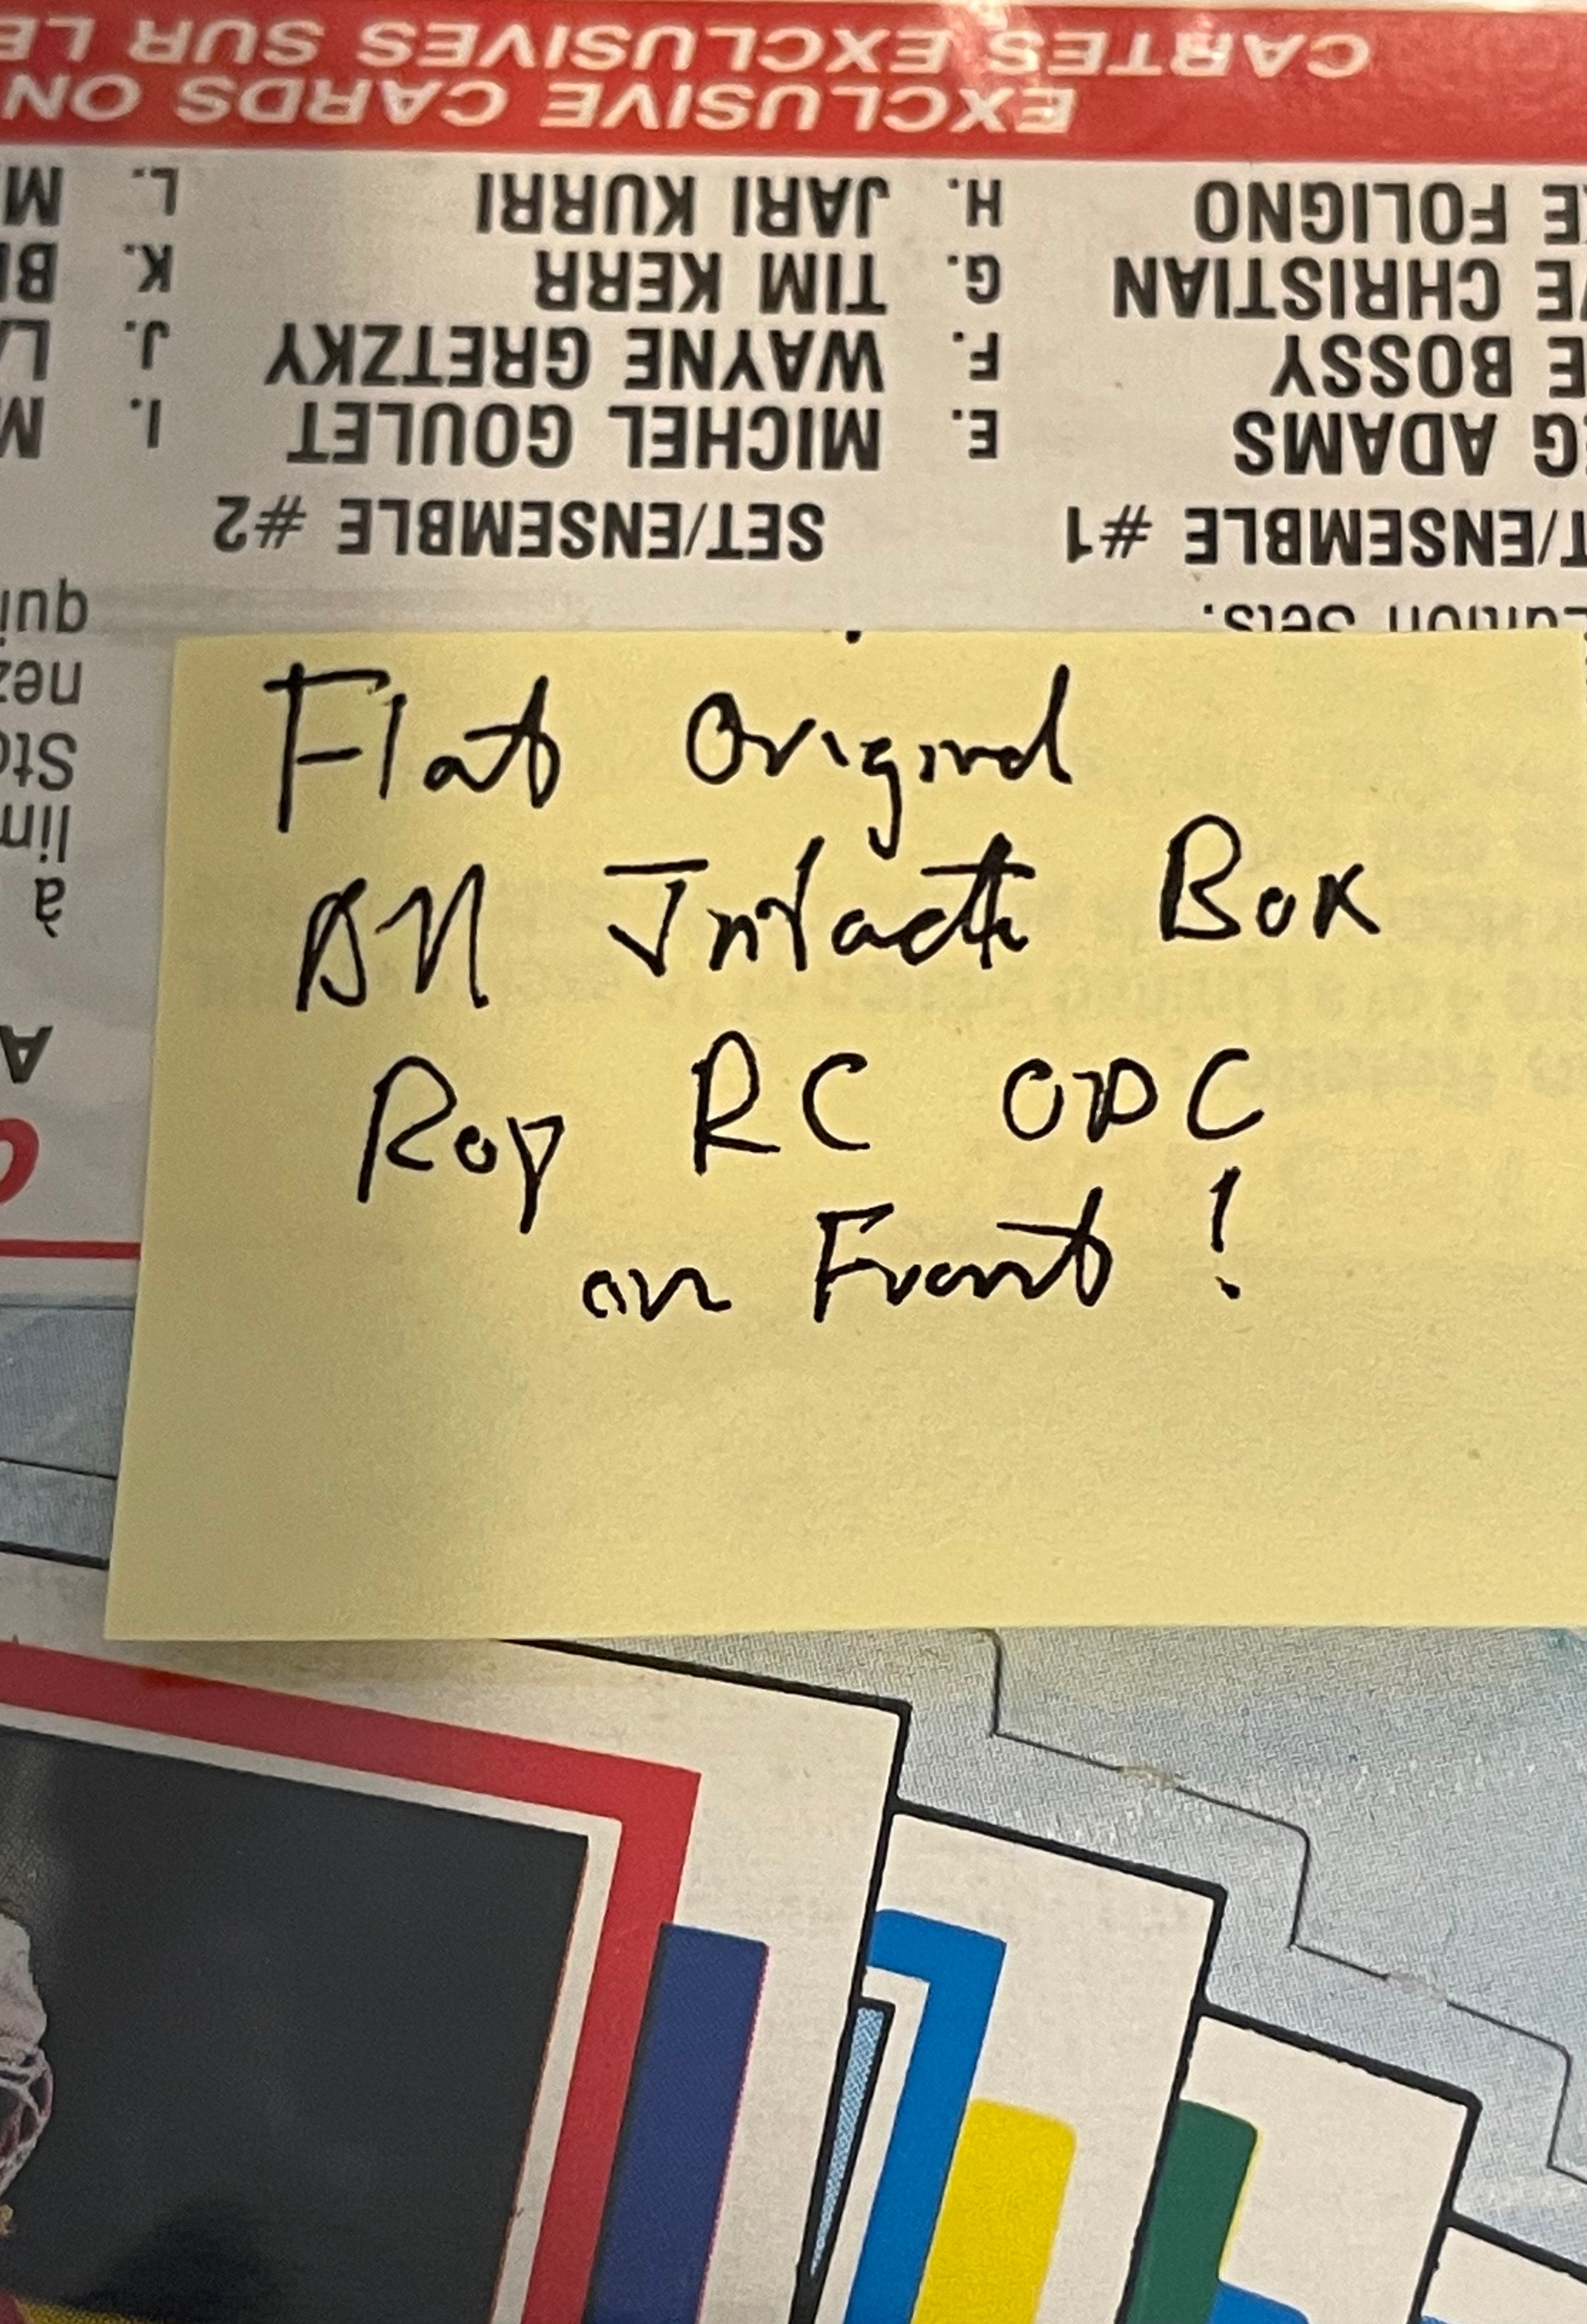 Patrick Roy rookie year empty flat opc hockey display cards box 1986